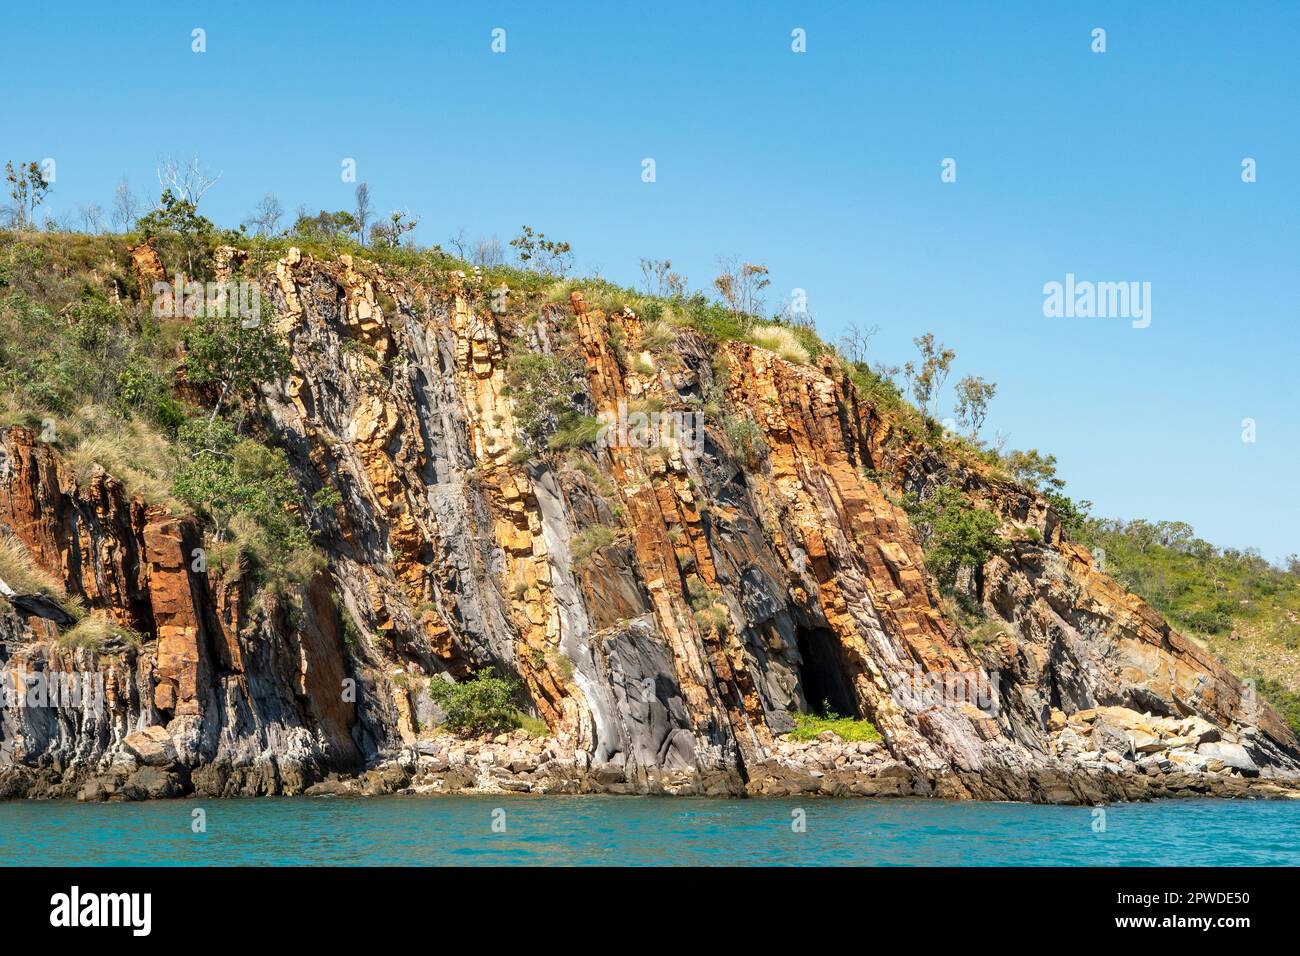 Layered Rock Formations at Nares Point, Kimberley Coast, WA, Australia Stock Photo